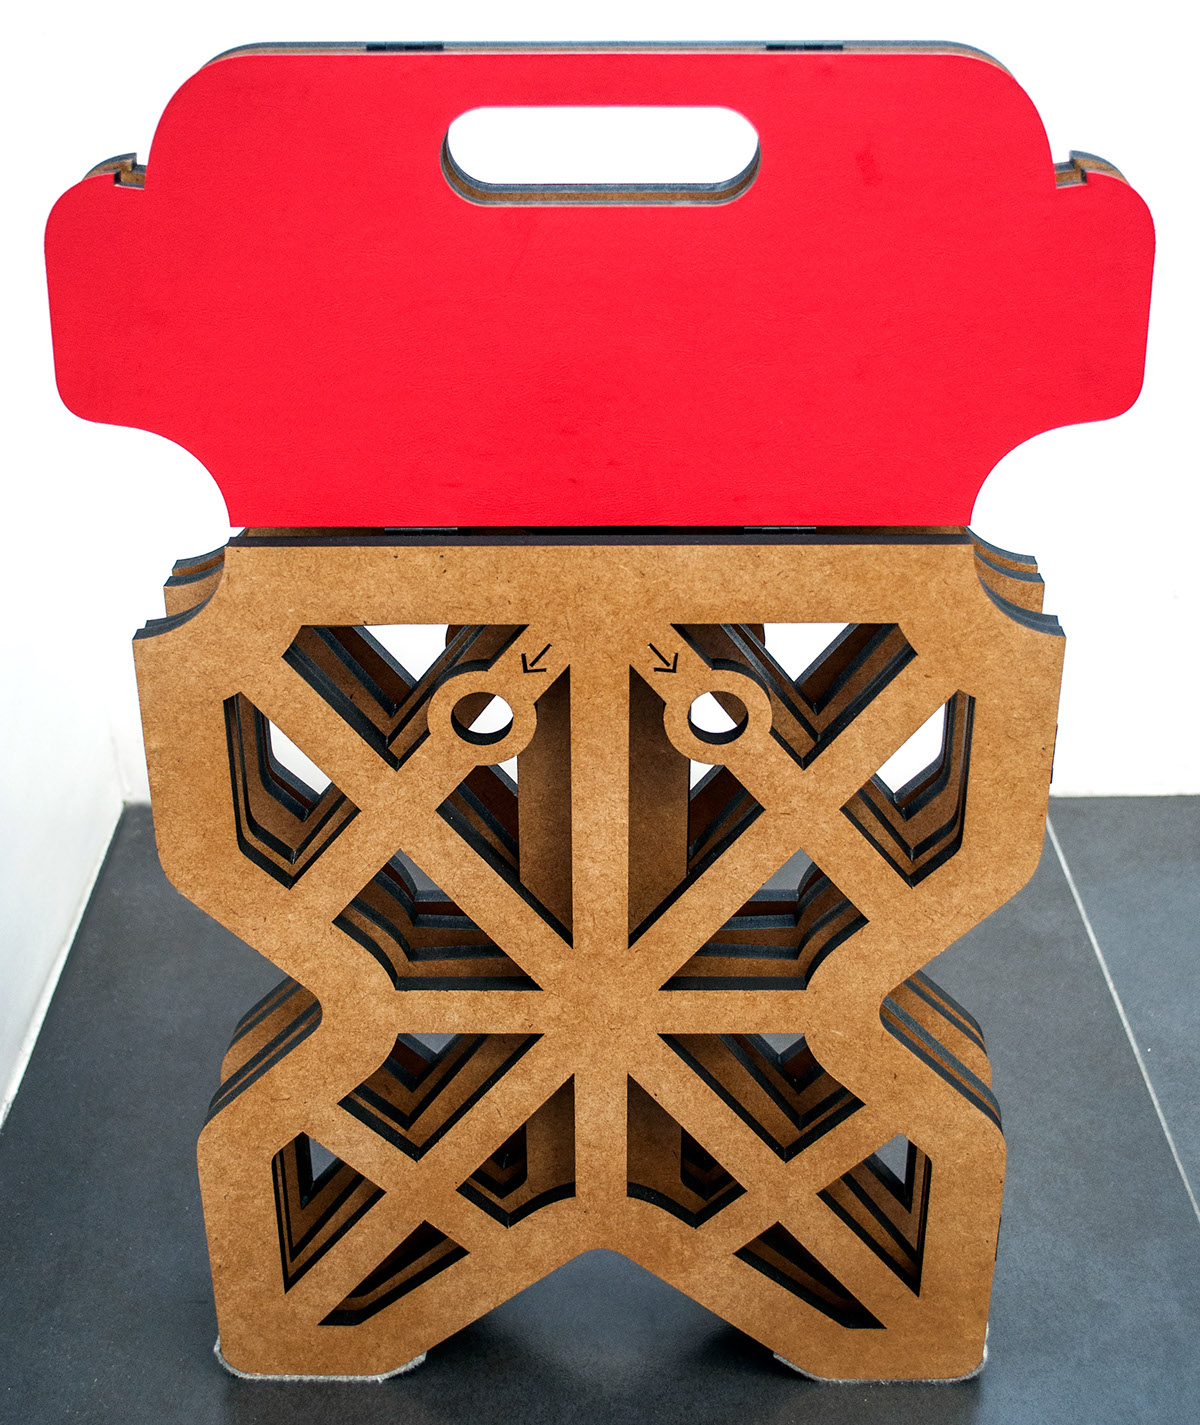 product design stool